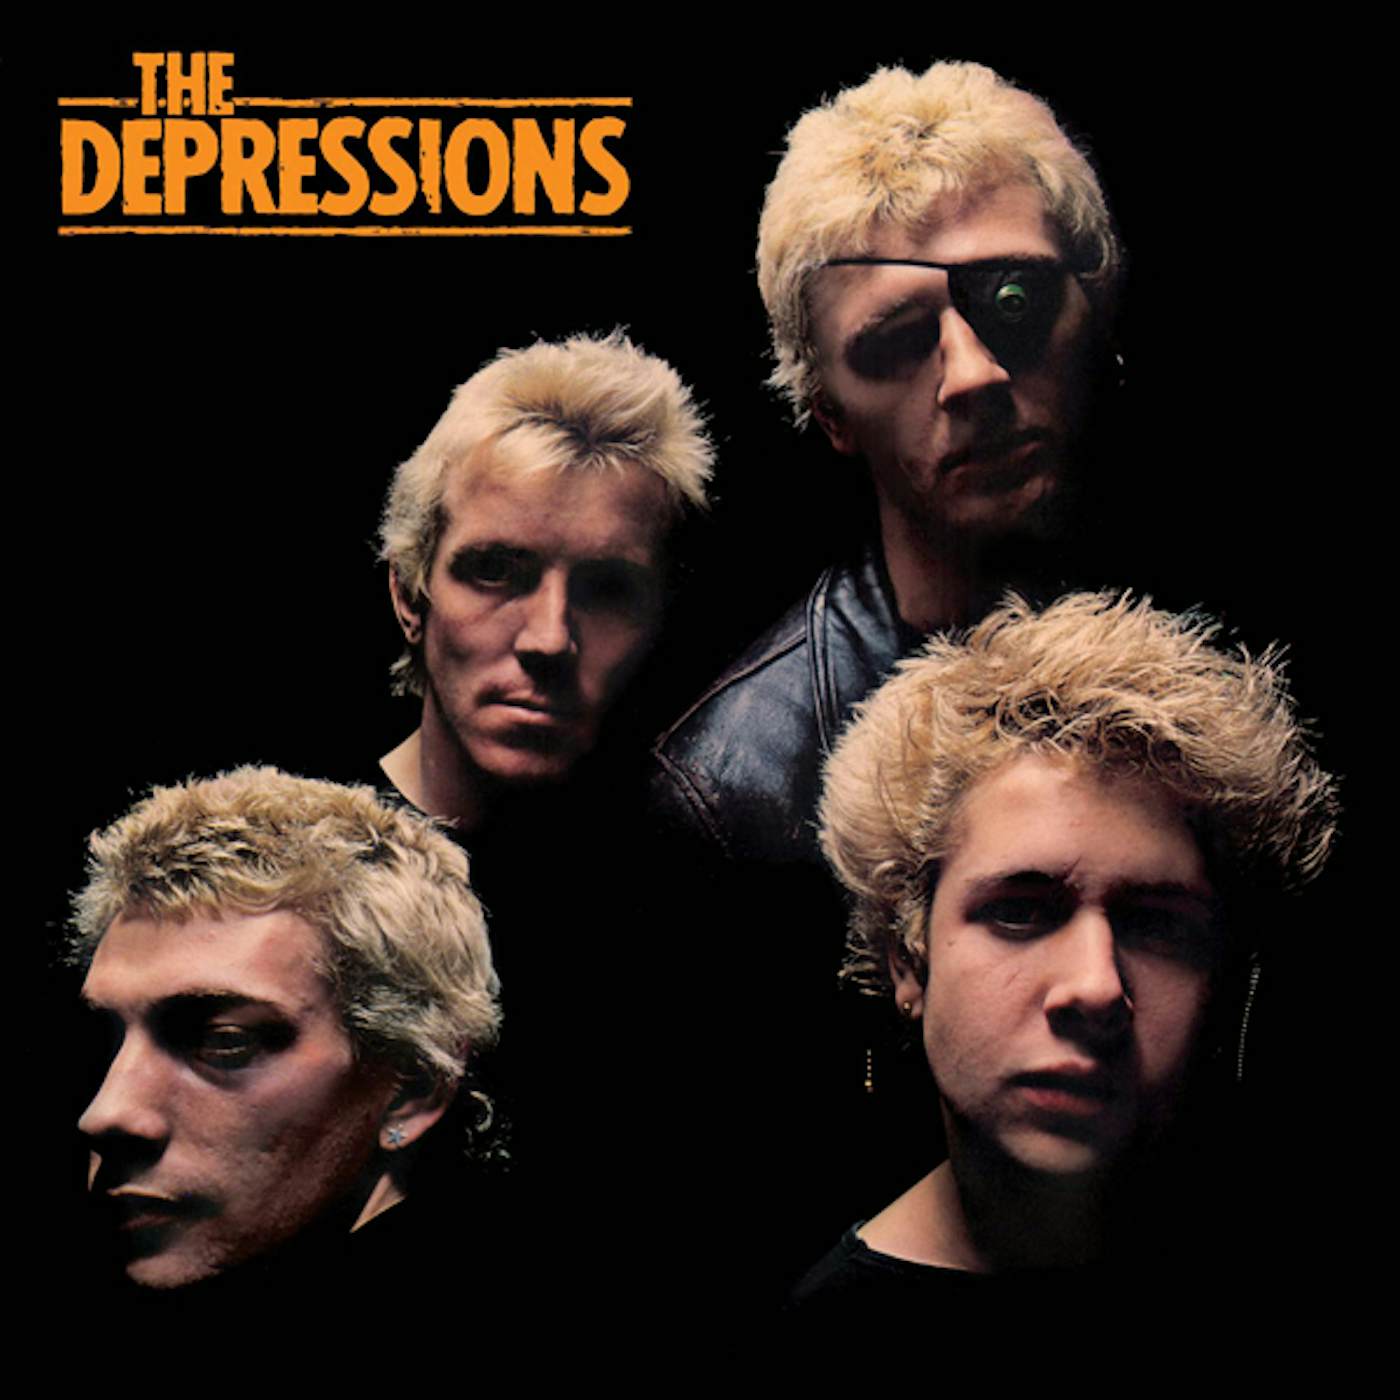 The Depressions Vinyl Record